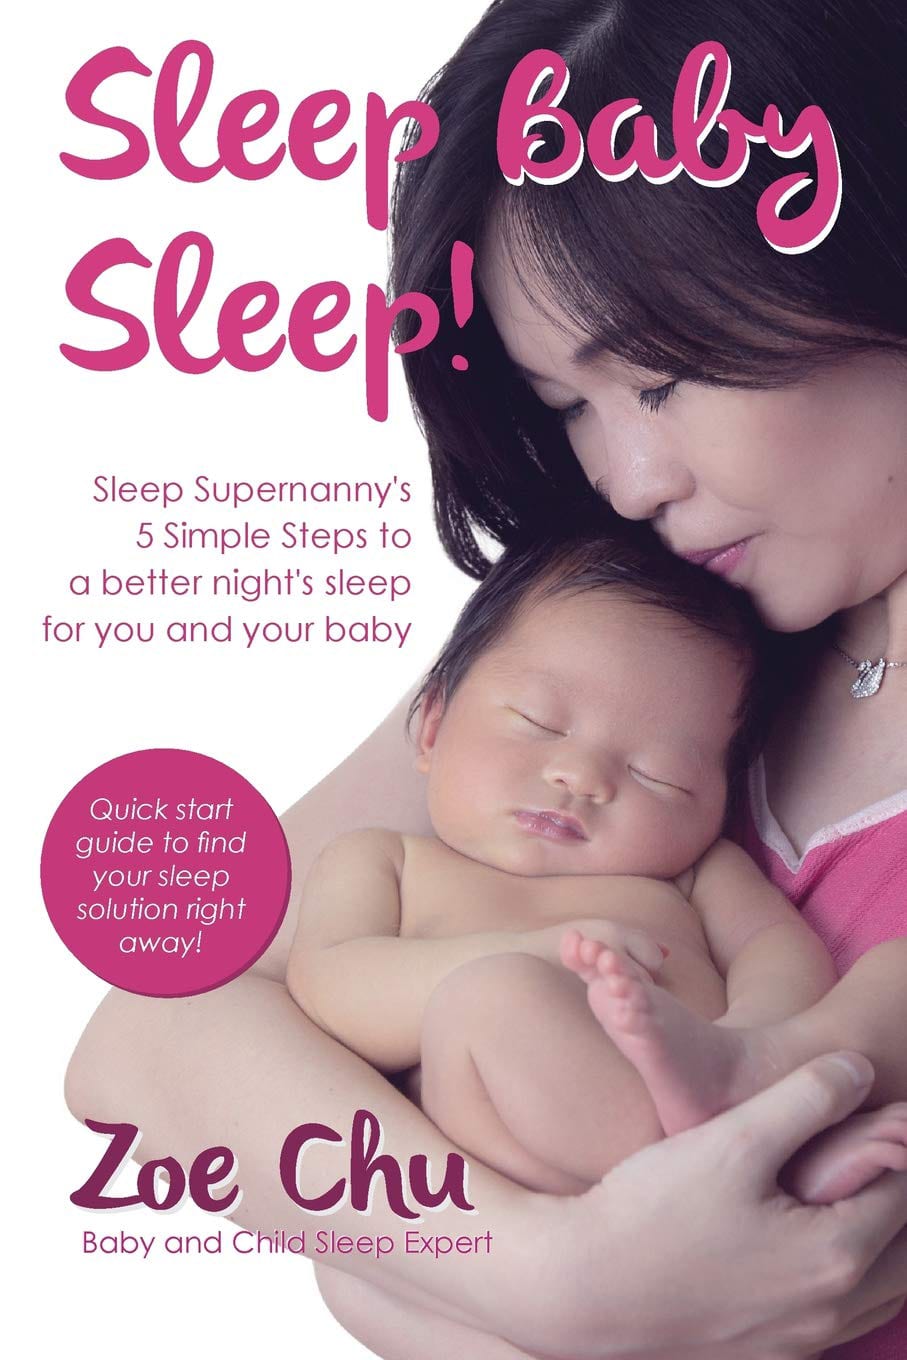 Sleep Baby Sleep: Sleep Supernanny's 5 Simple Steps to a Better Night's Sleep For You and Your Baby book cover.